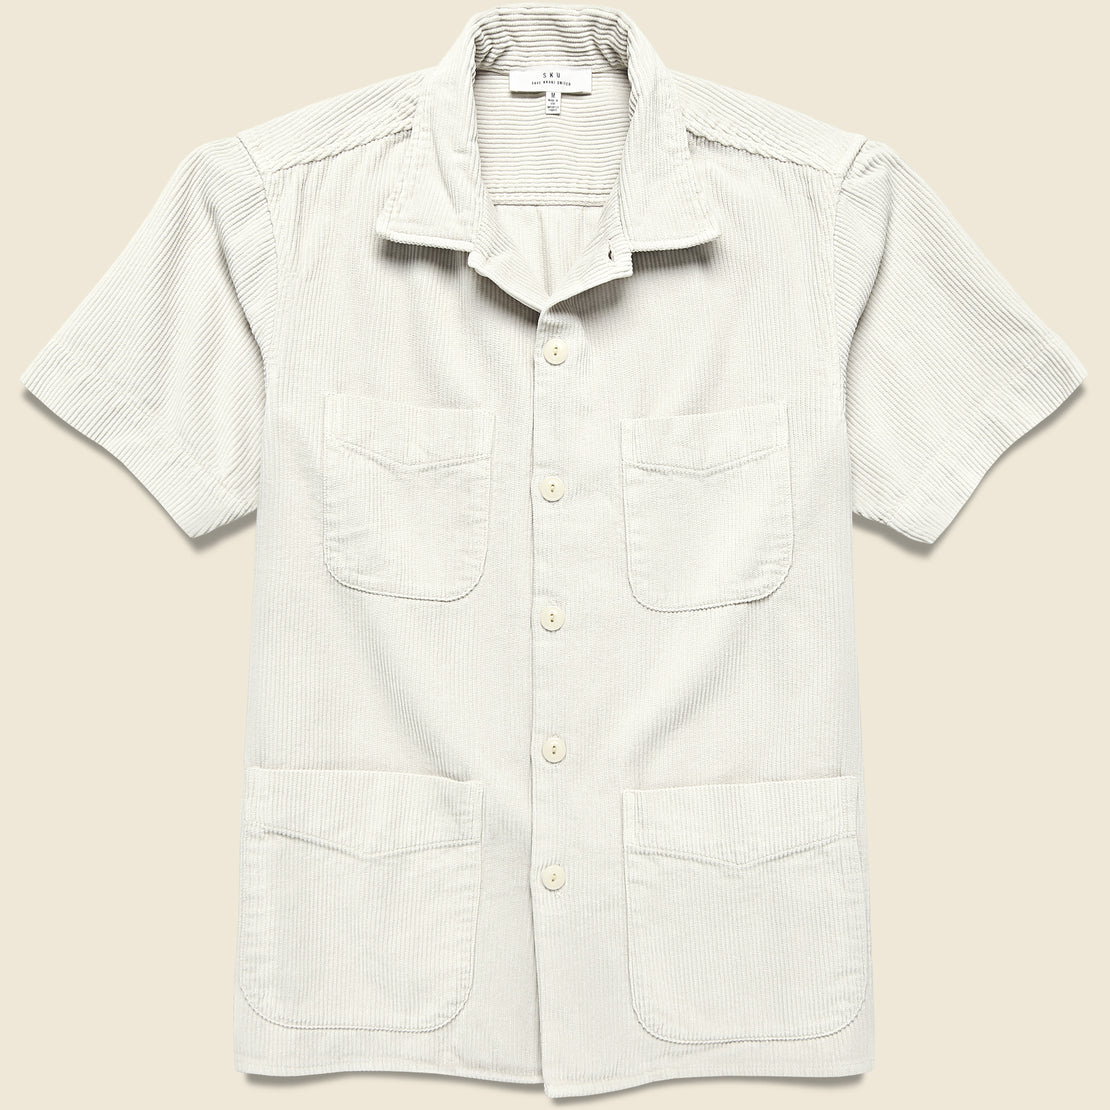 Save Khaki Corduroy Work Shirt - Ash